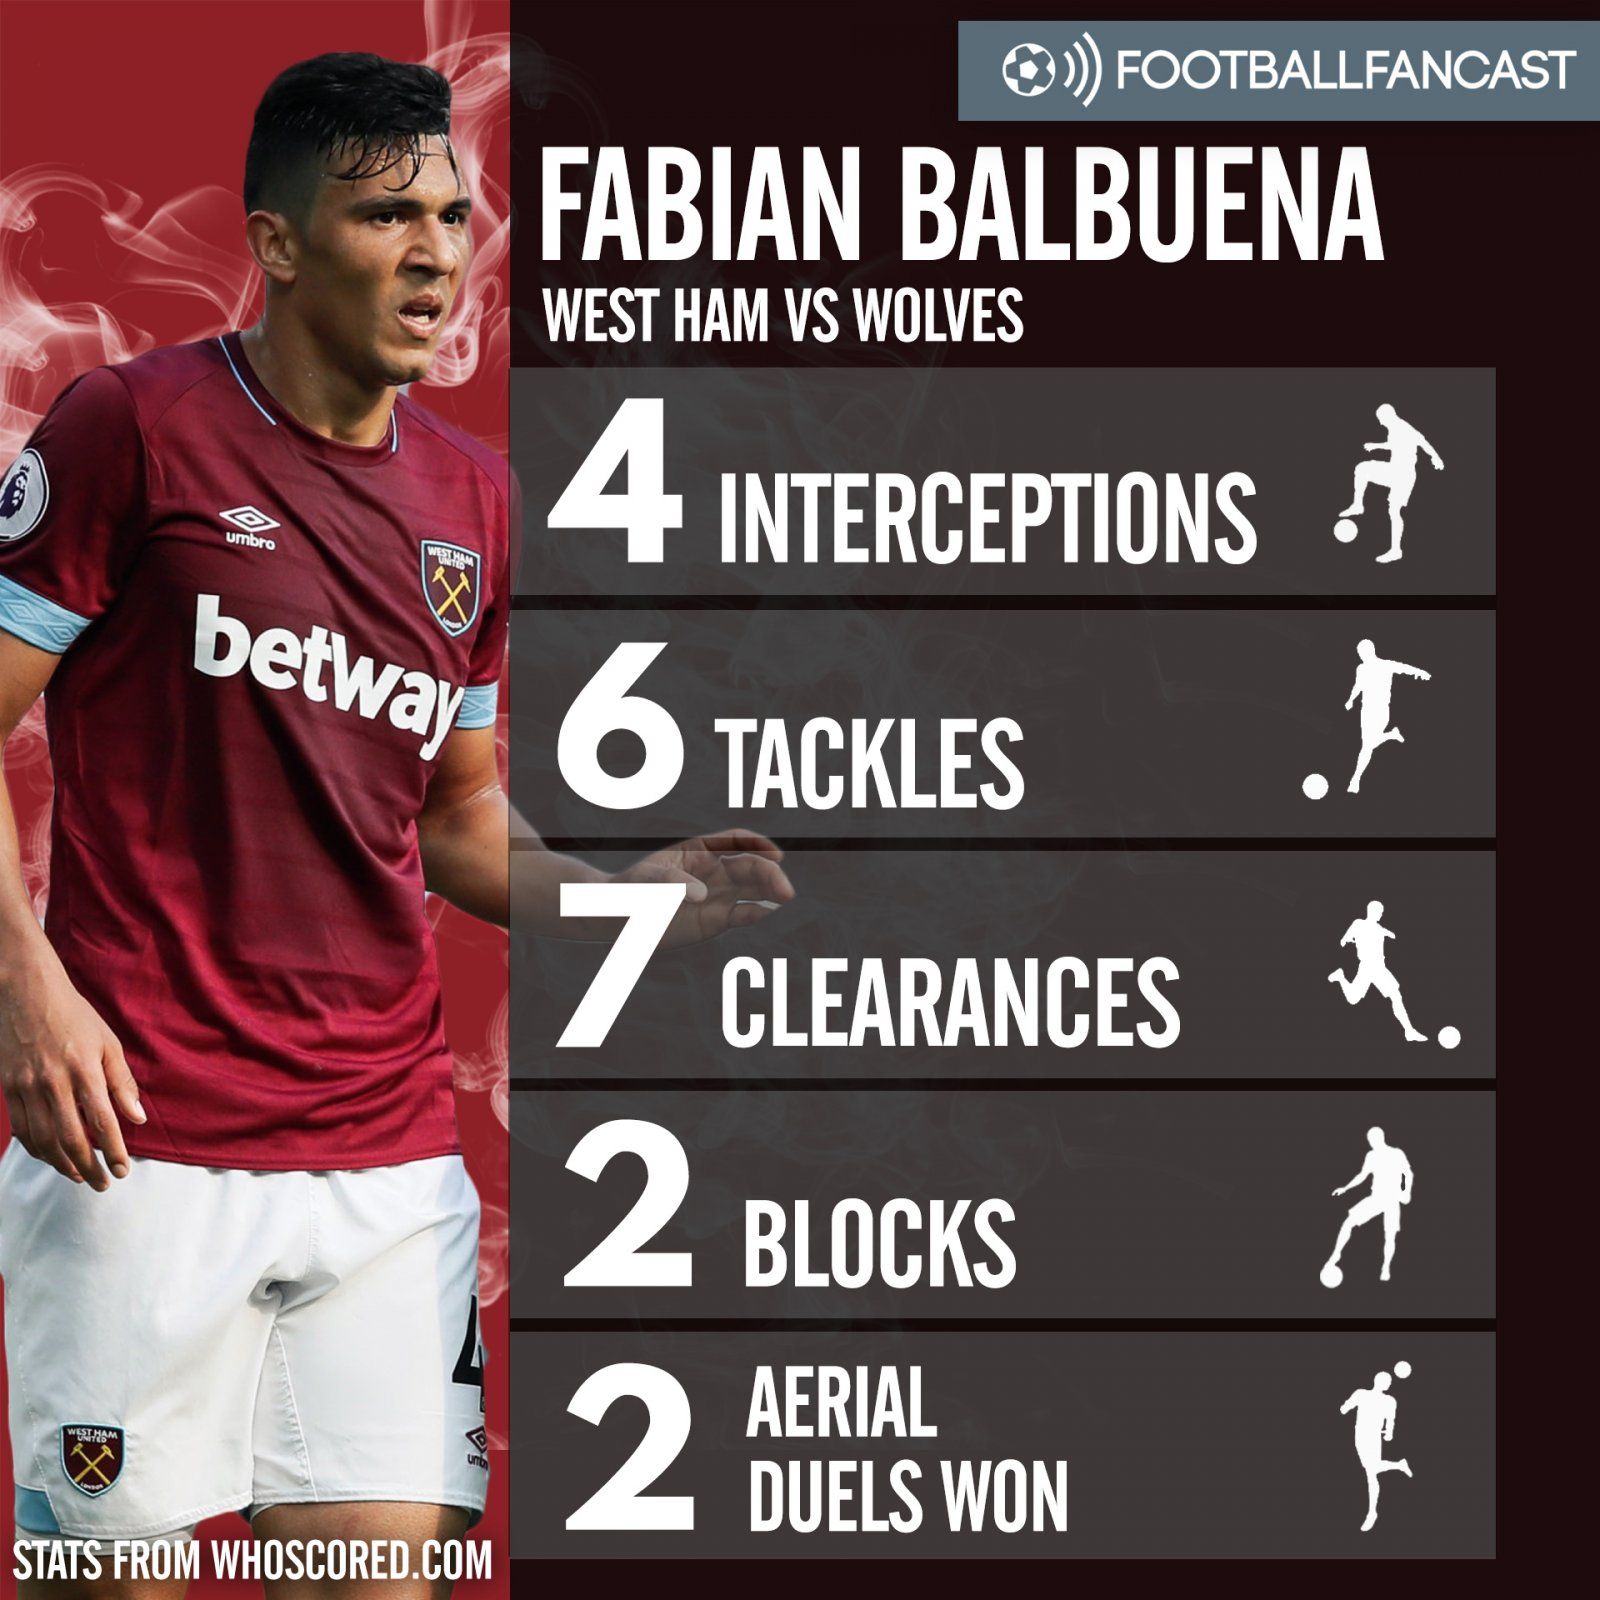 Fabian Balbuena's stats vs Wolves